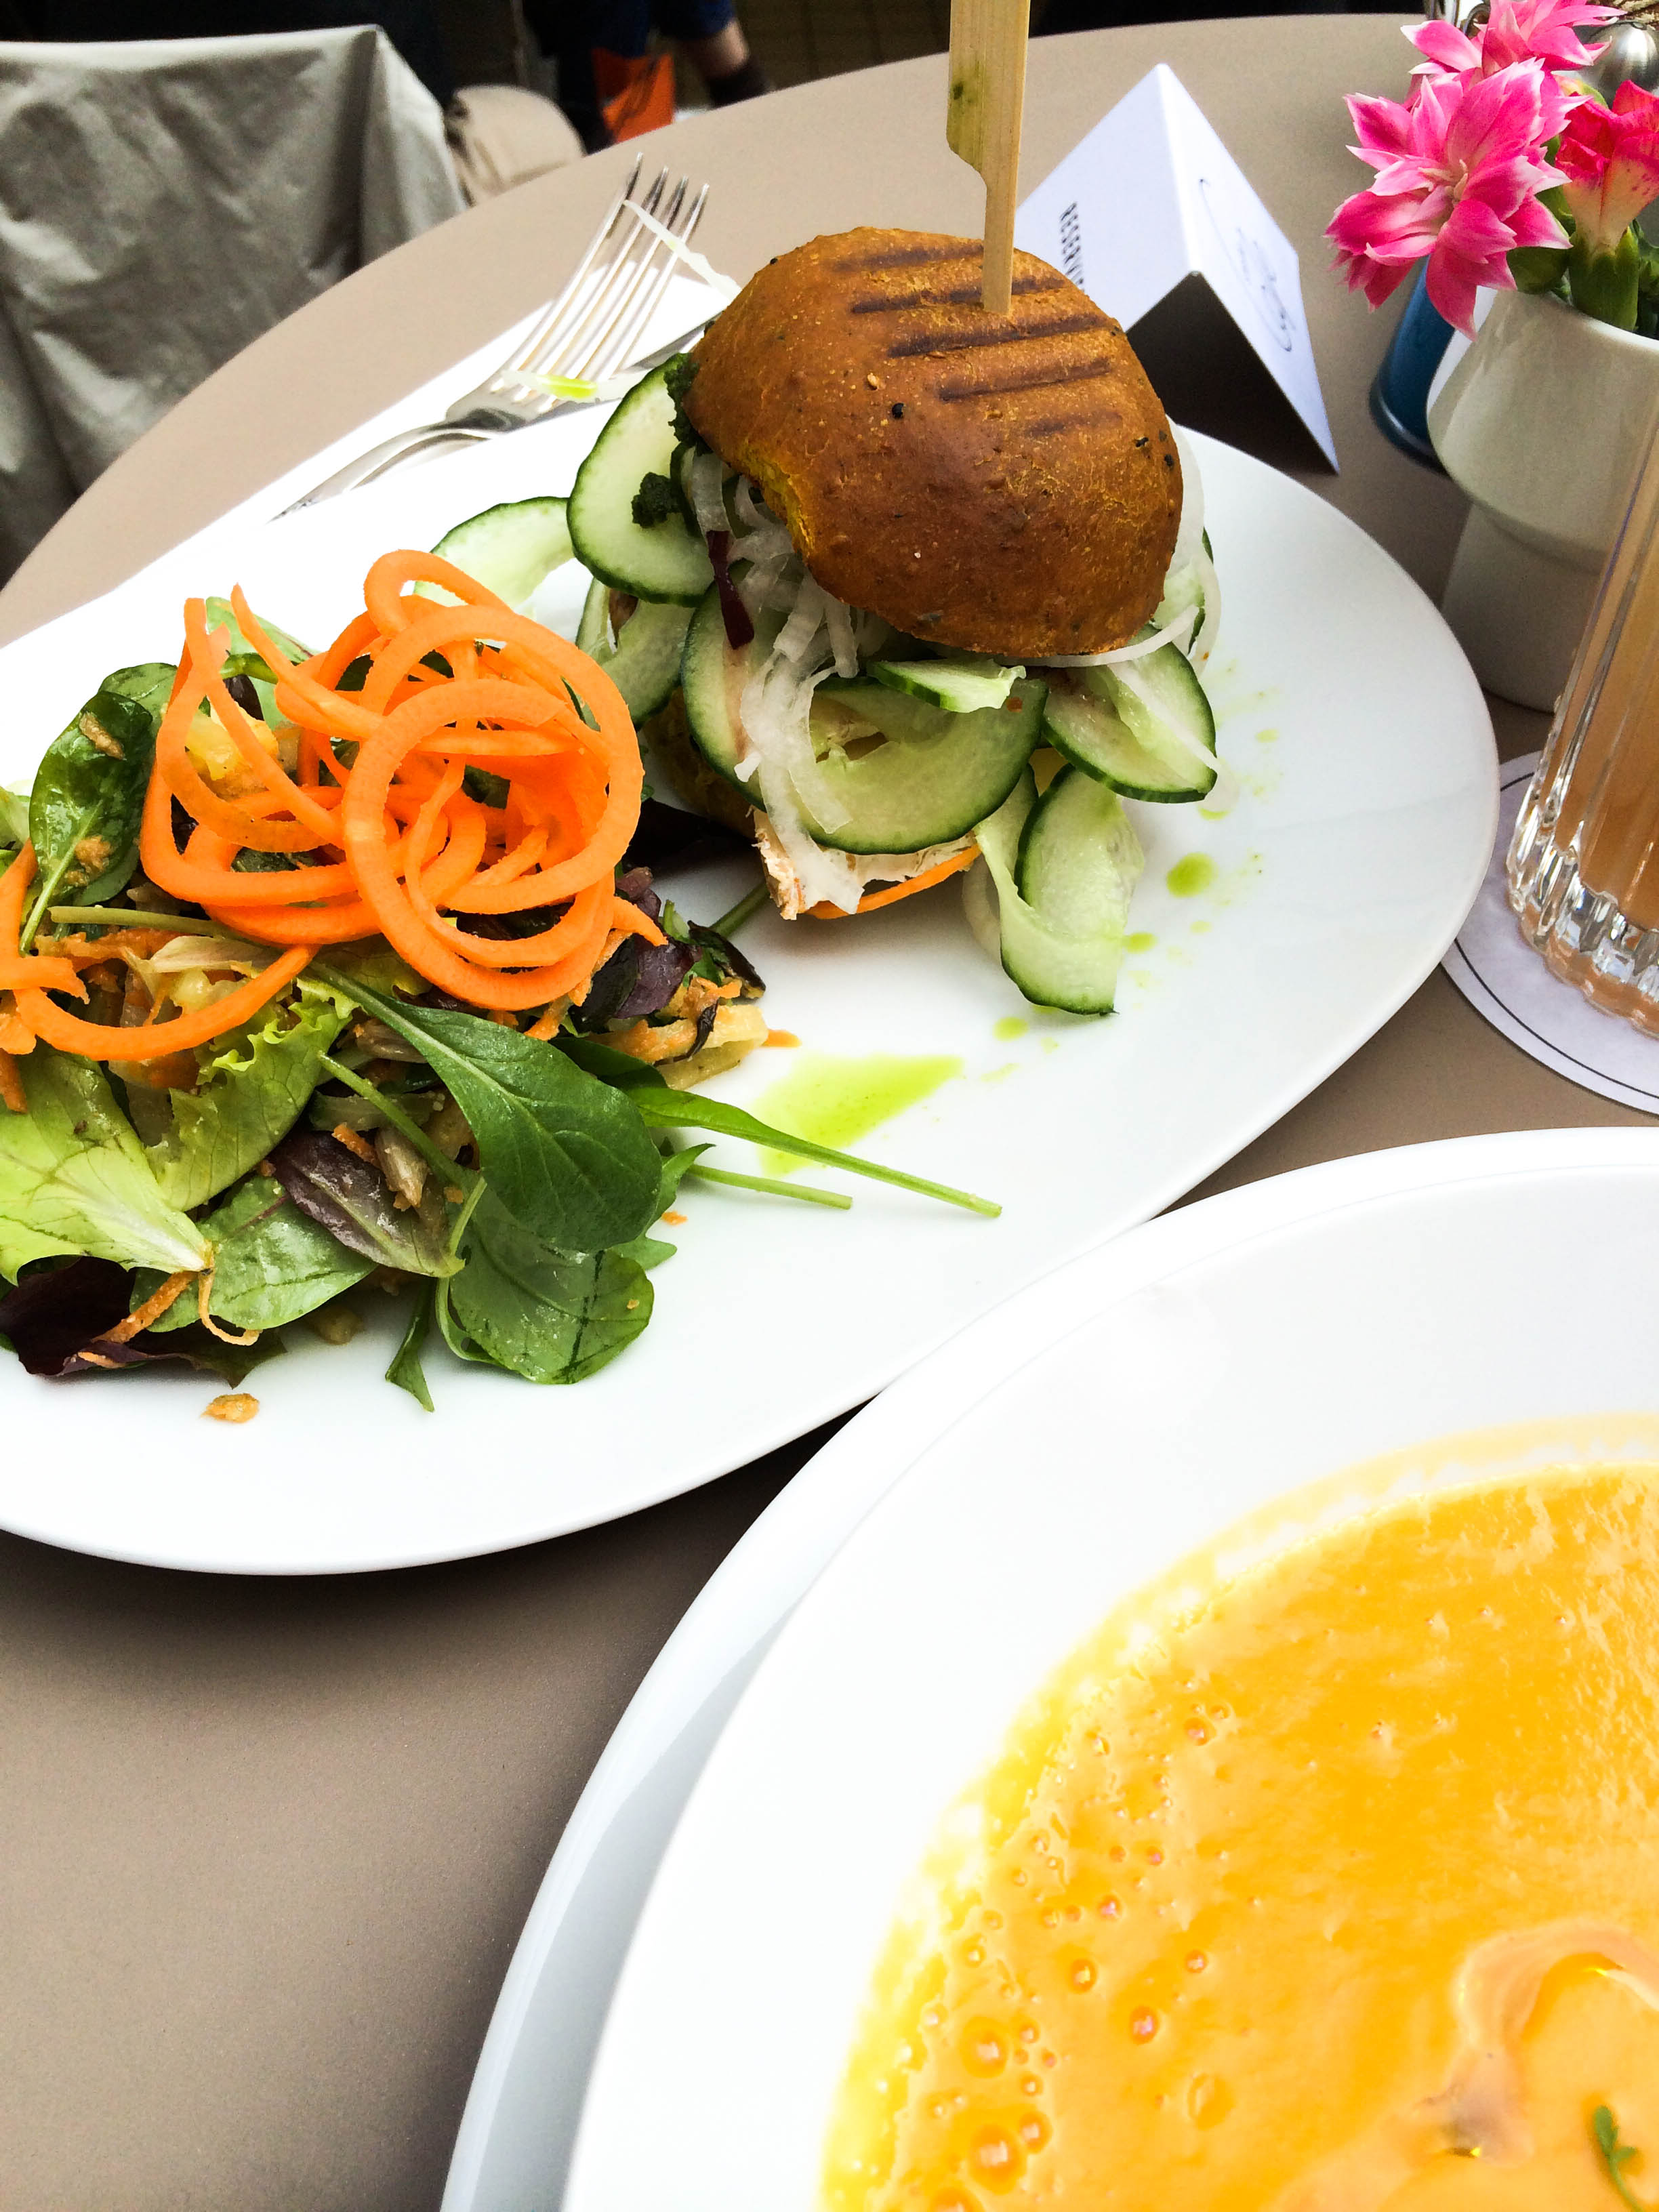 Stereo-Café-Munich-Hotspot-Lindarella-Vegan-Clean-Healthy-Foodblogger-München-Deutschland-Fitnessblog-4